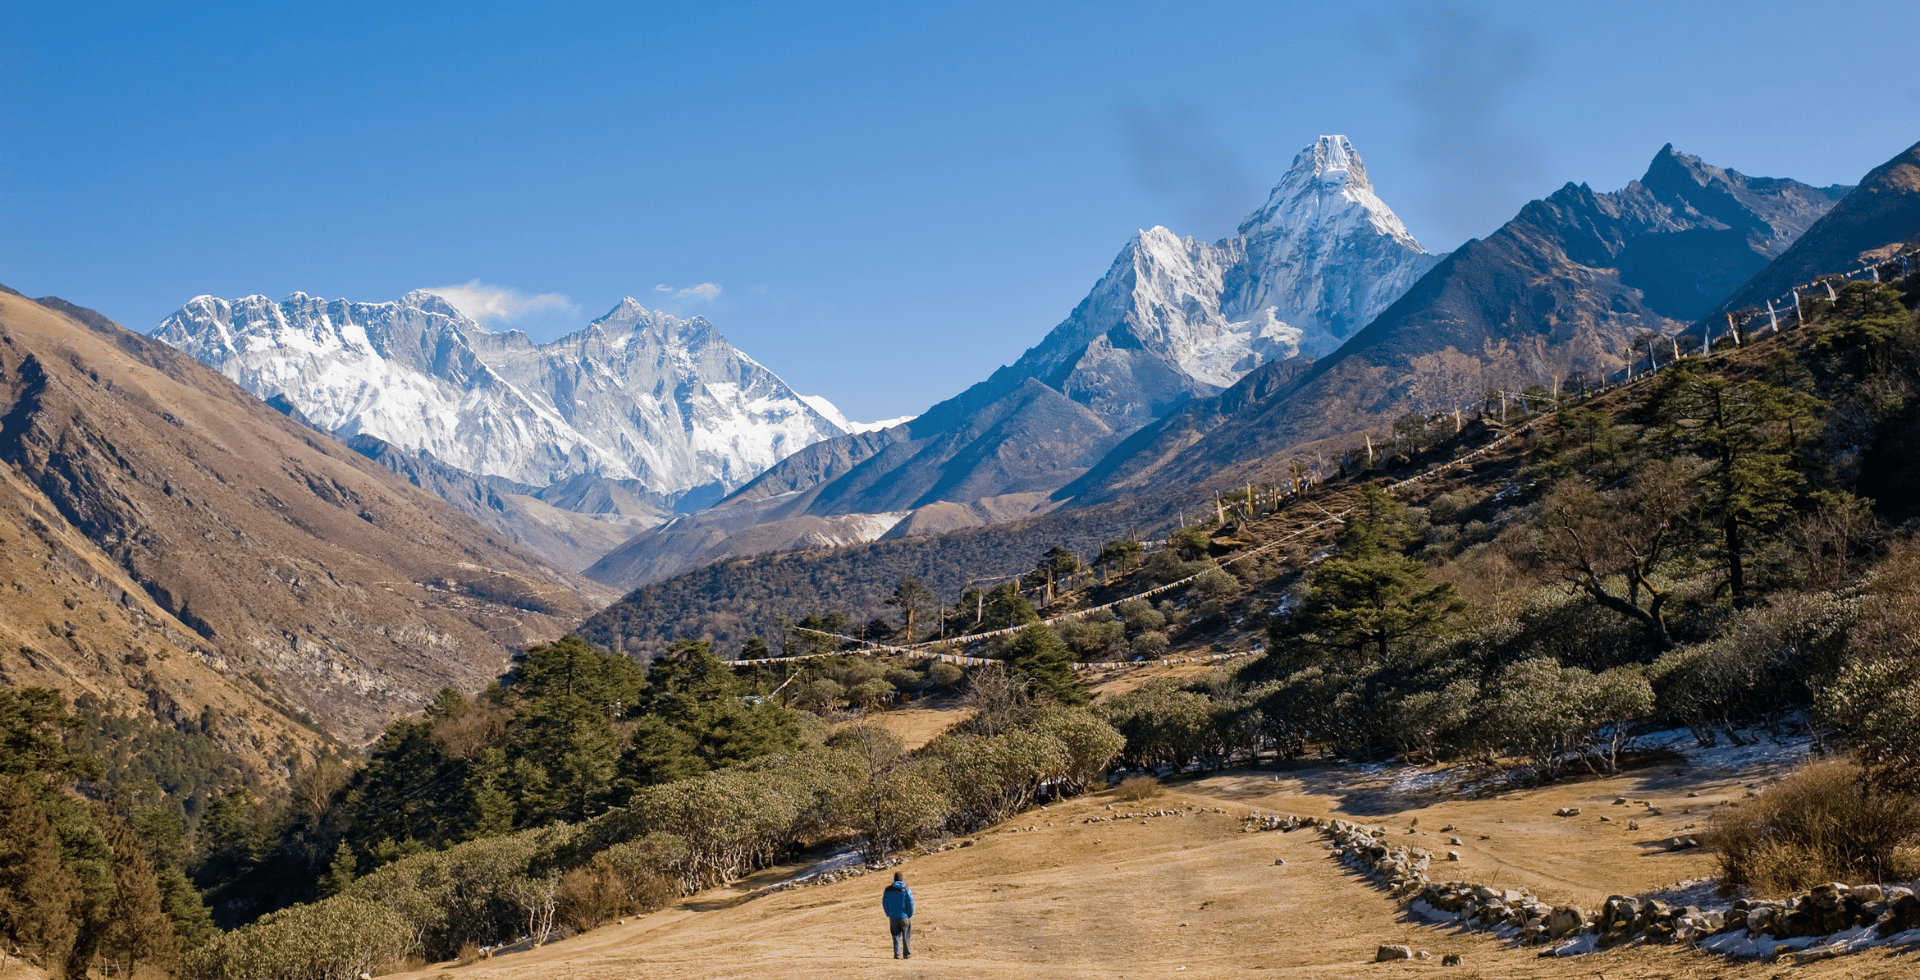 Everest base camp trek packing list suggestion